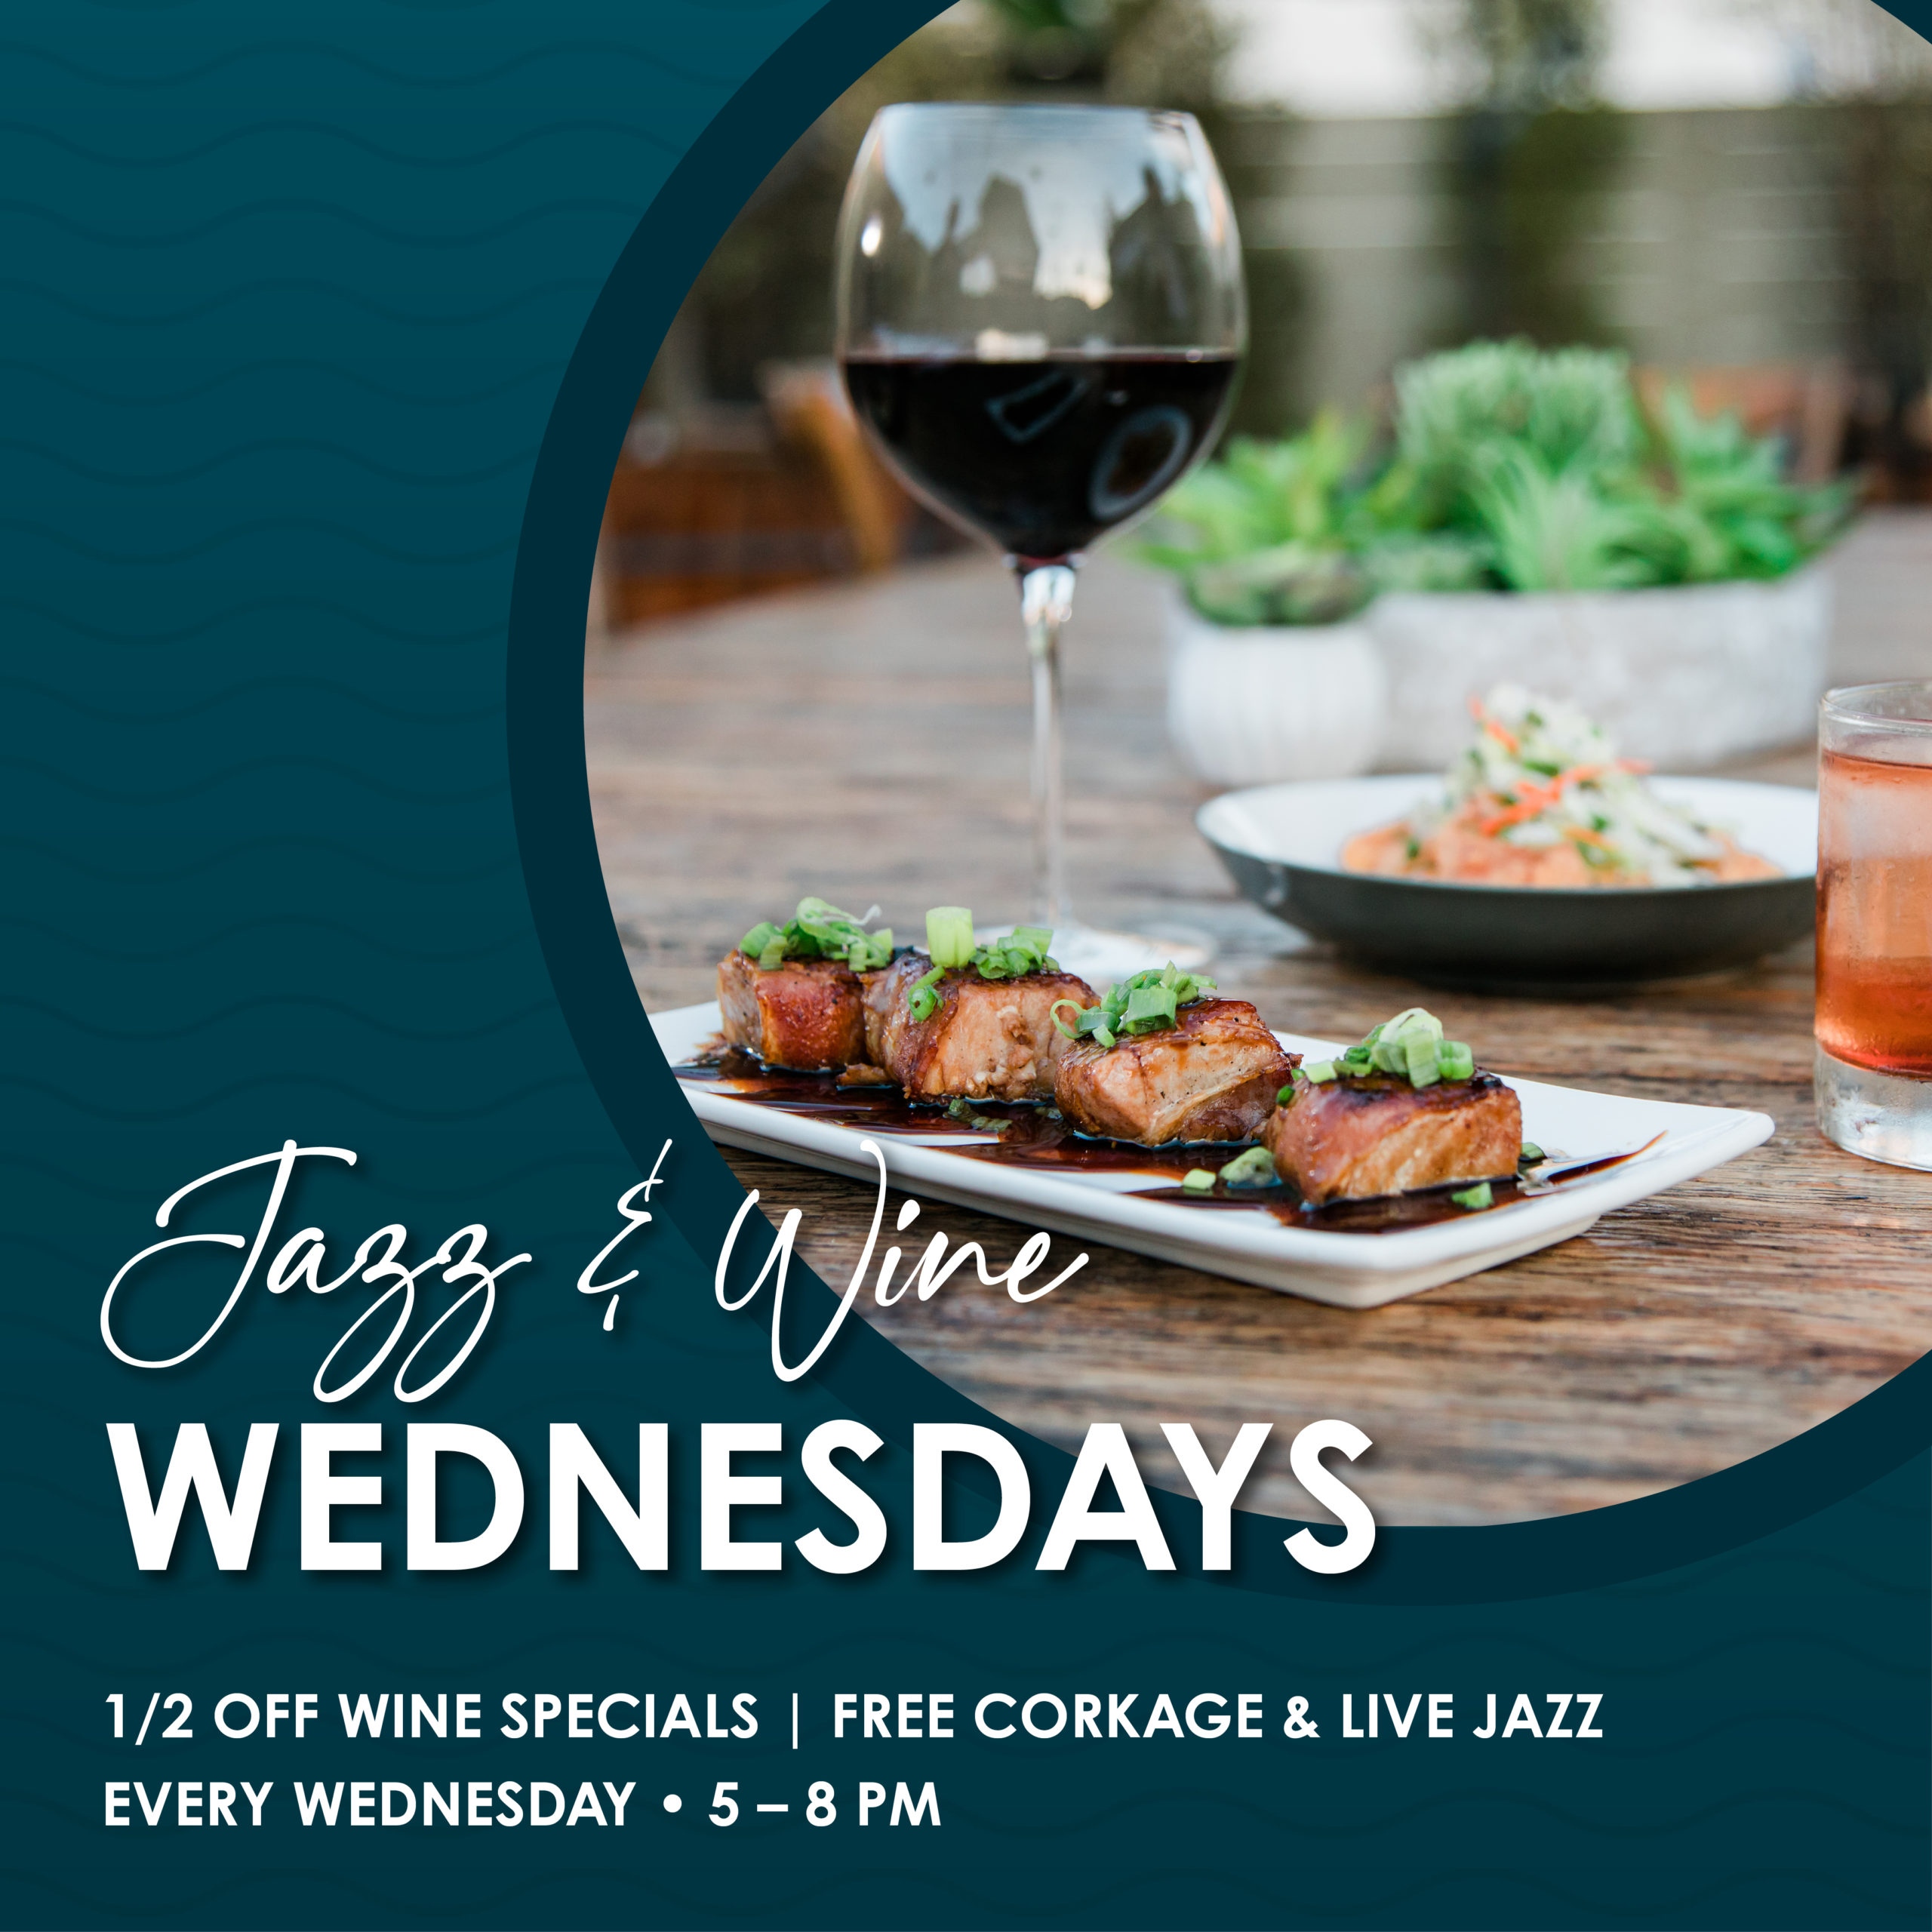 jazz and wine Wednesdays flyer